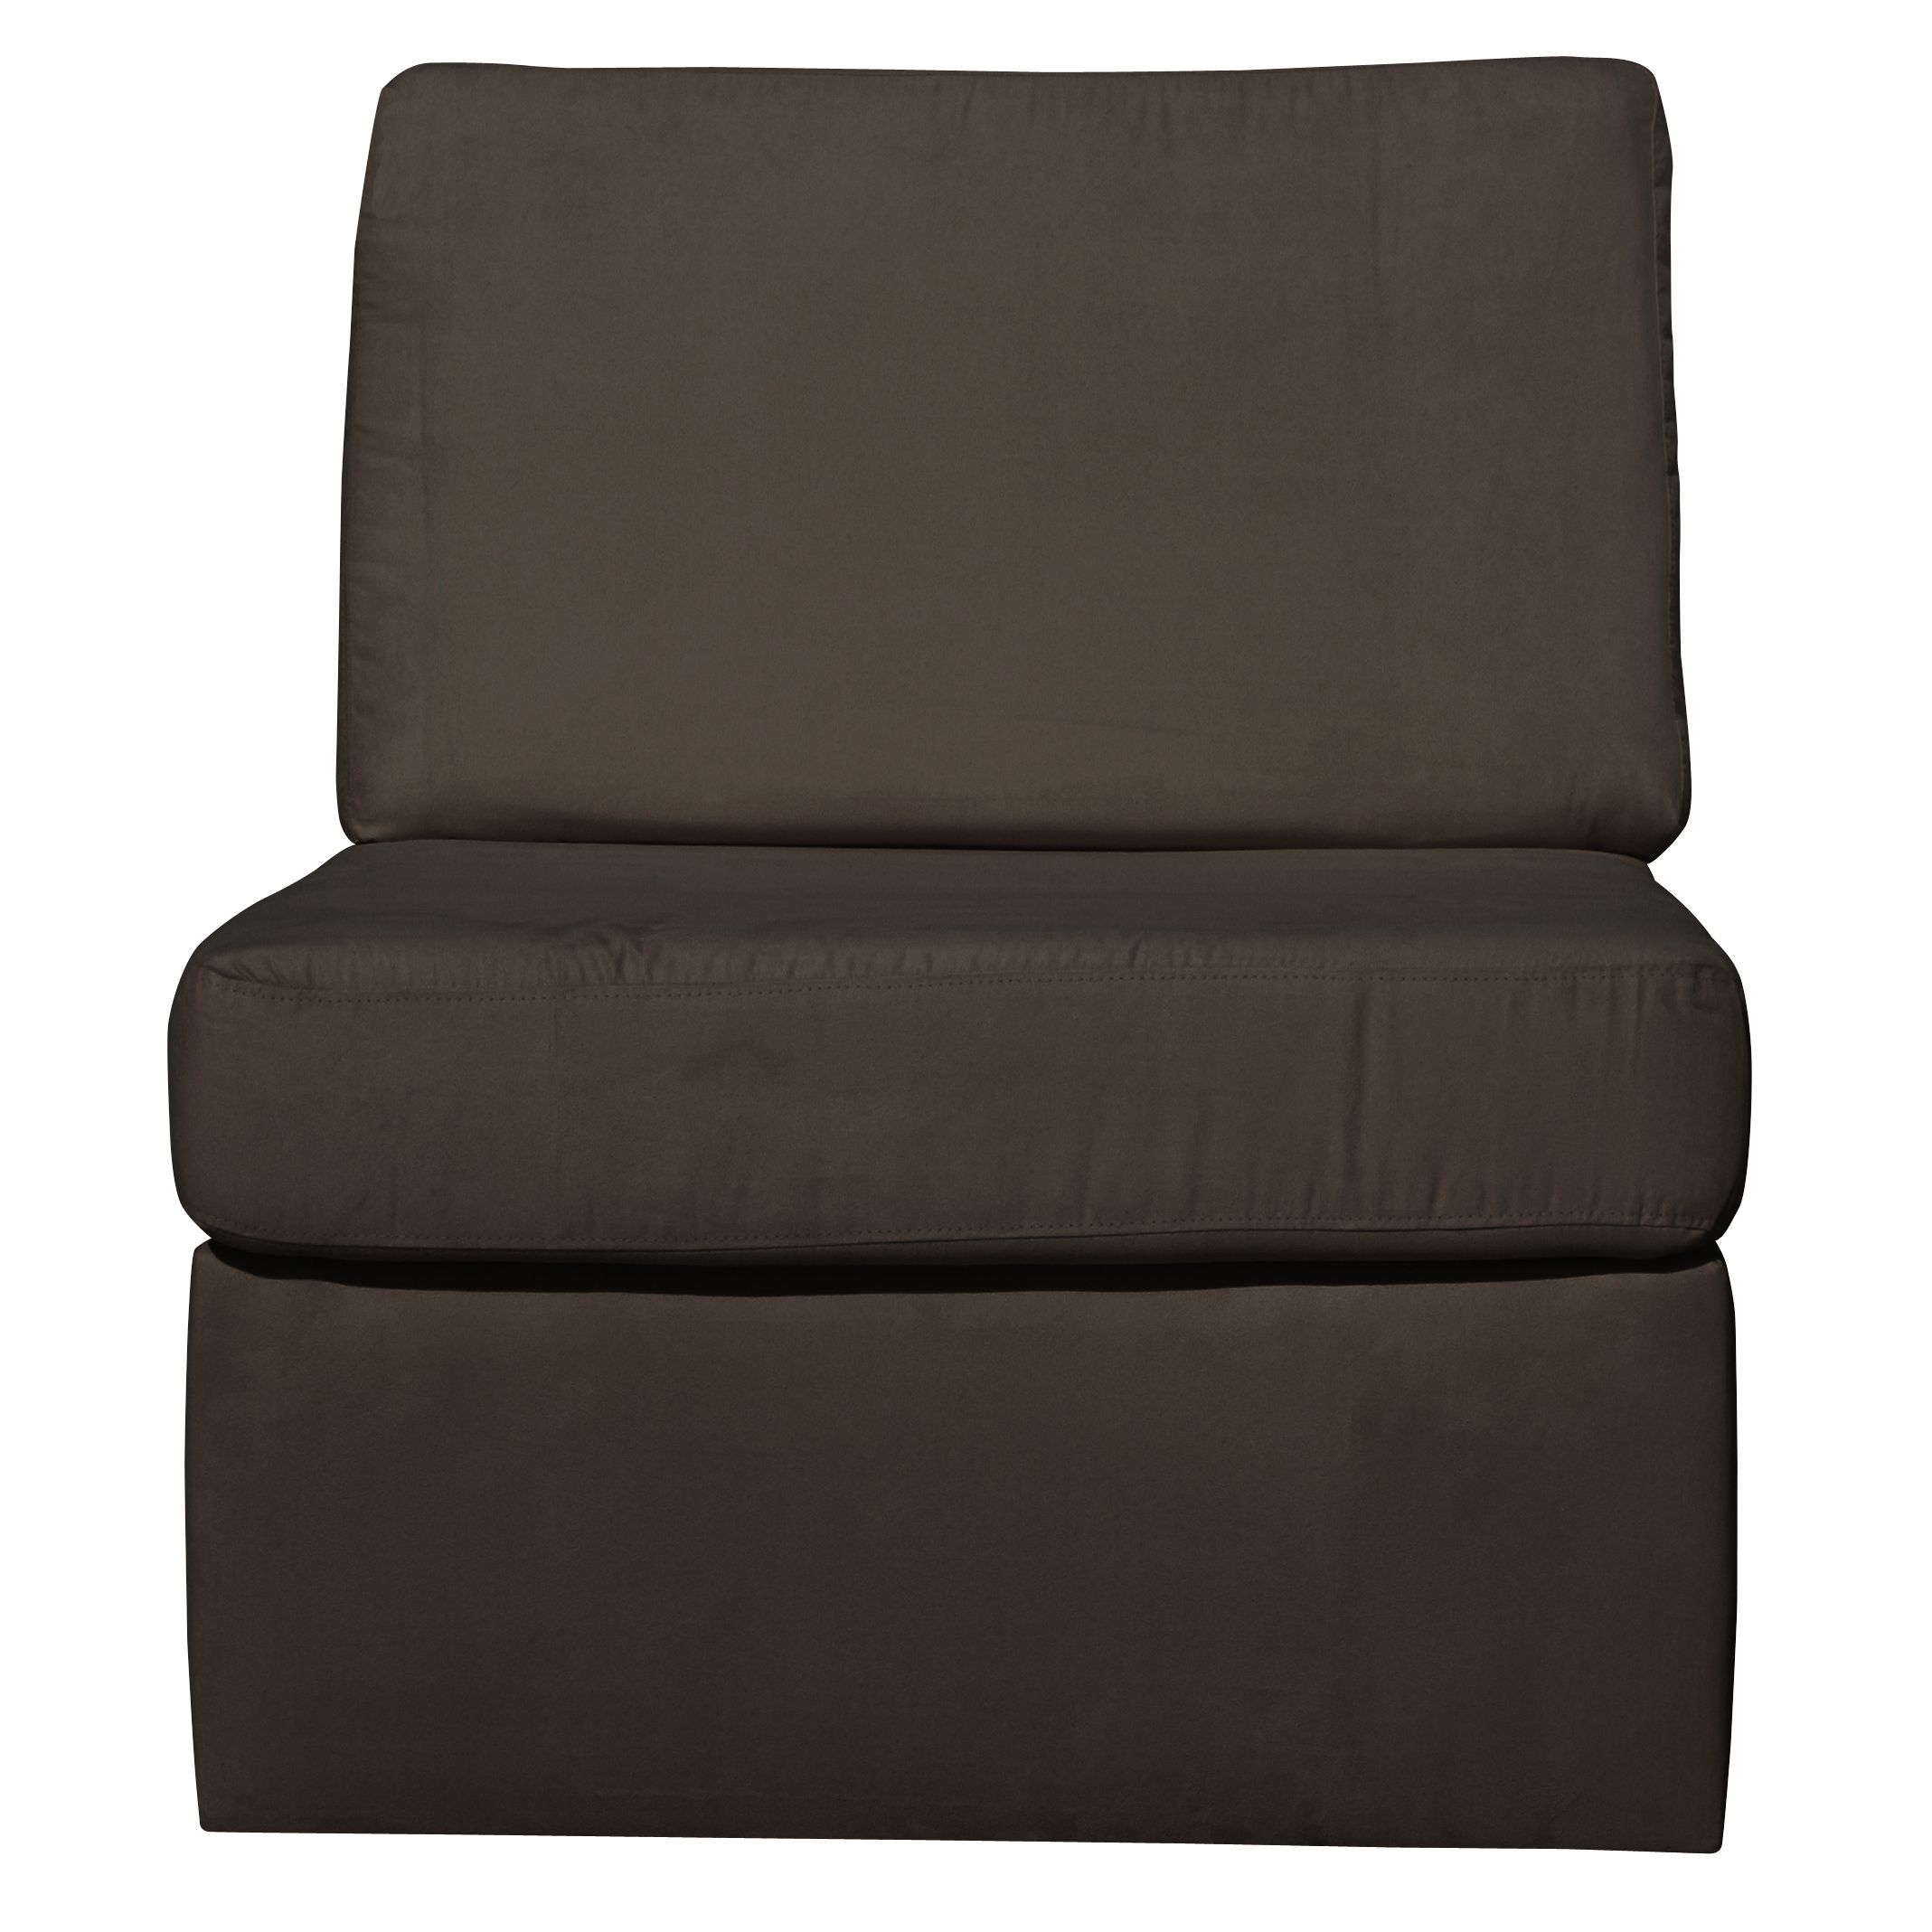 John Lewis Barney Chair Bed, Mocha